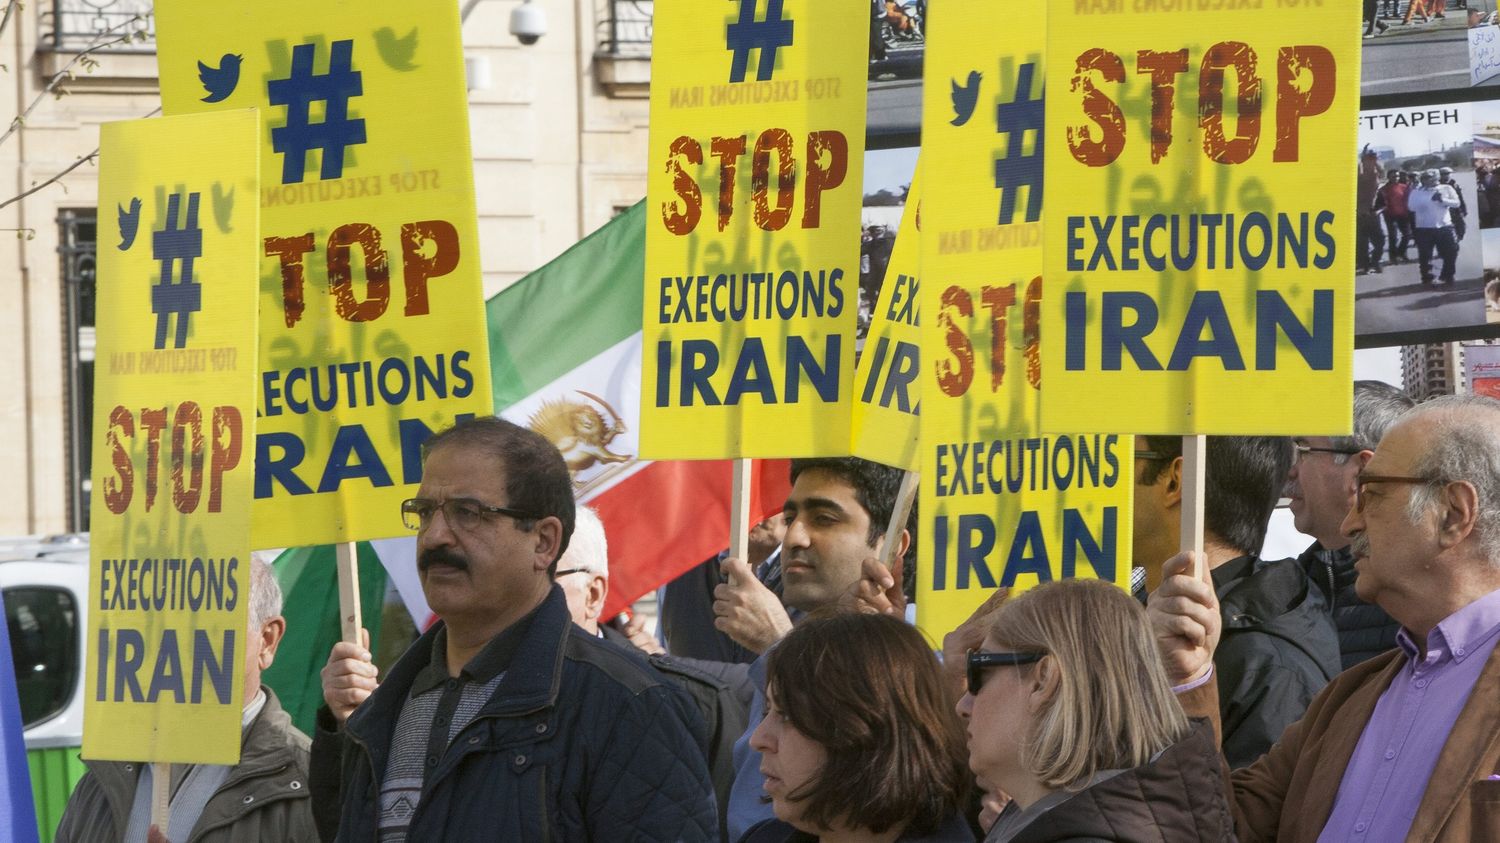 Death penalty in Iran: Amnesty International denounces 